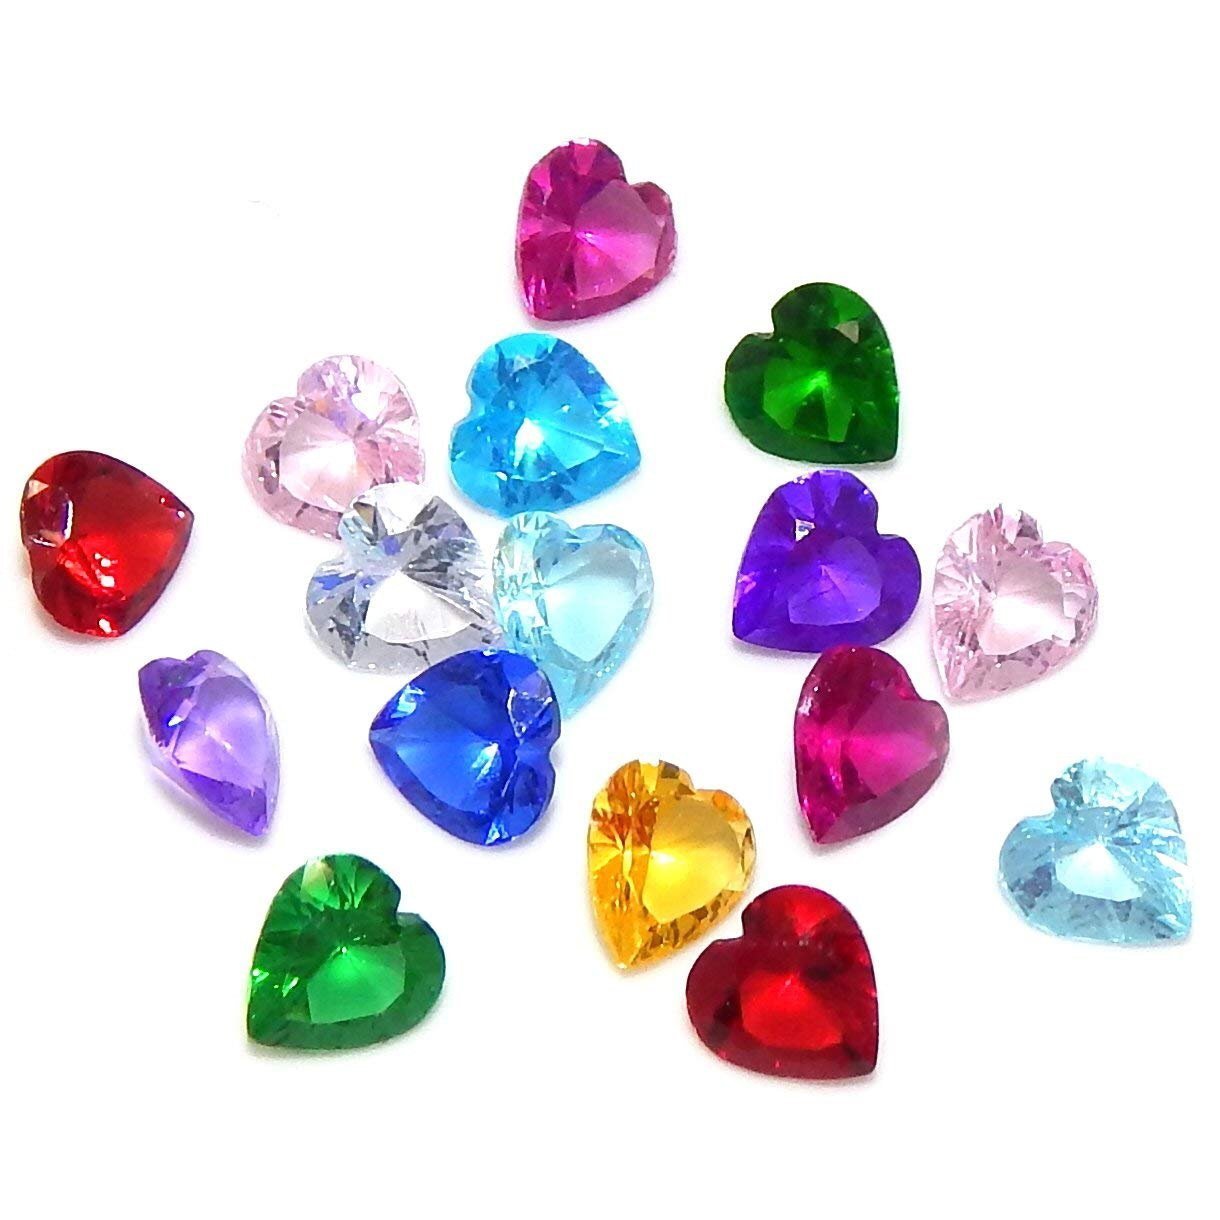 Memory Locket Charm - Birthstone Crystal Heart (July - Ruby) - The Little Jewellery Company